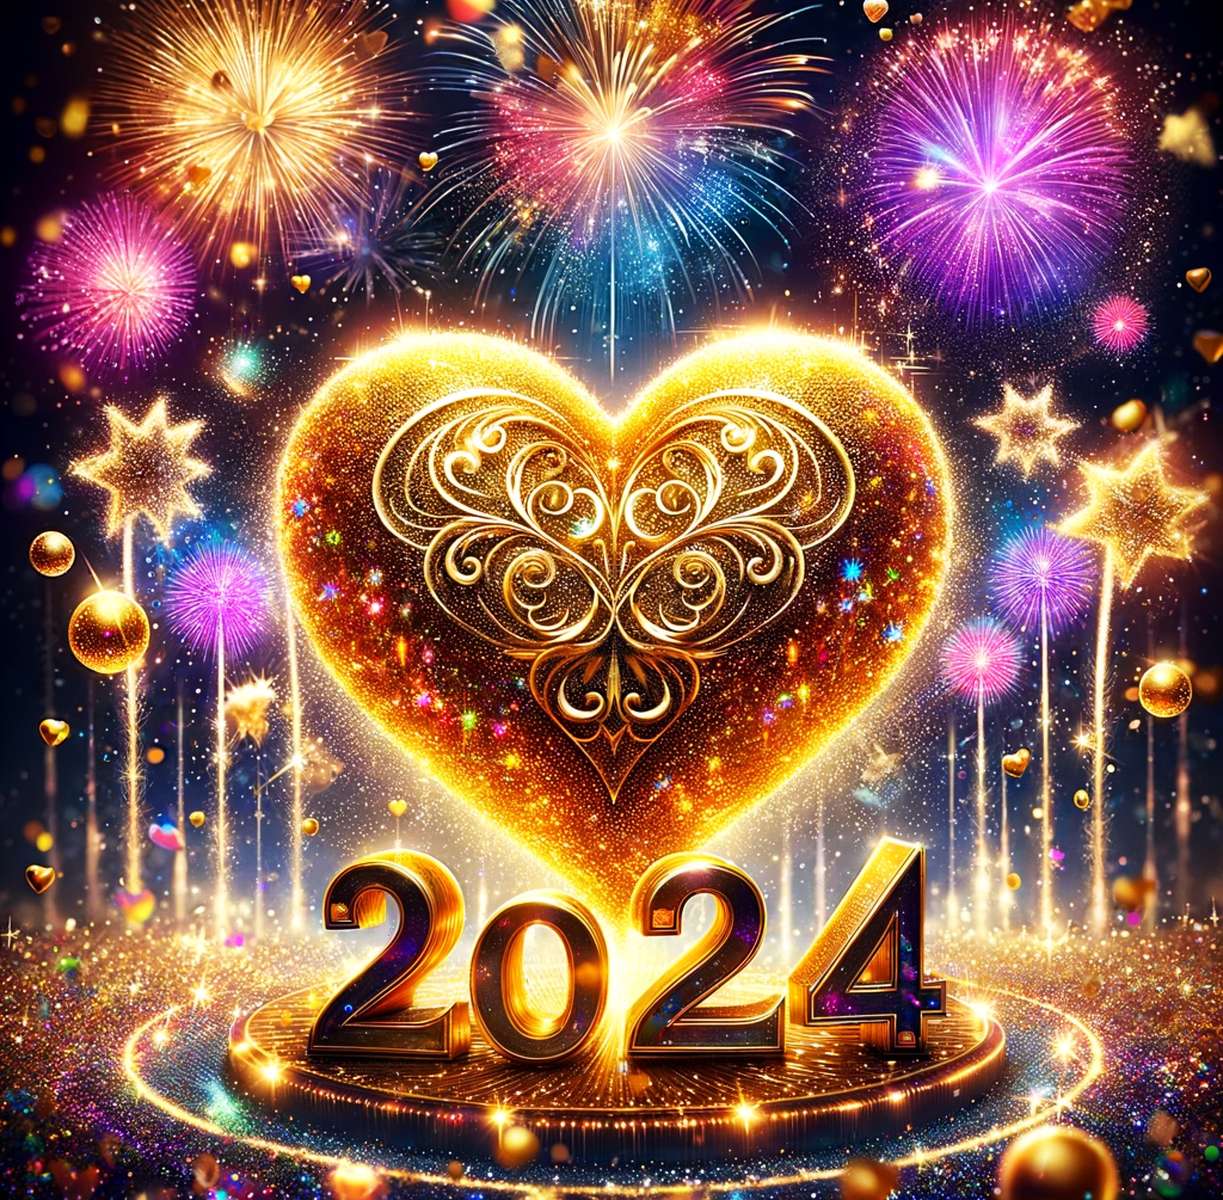 Fericire și dragoste în Noul An puzzle online